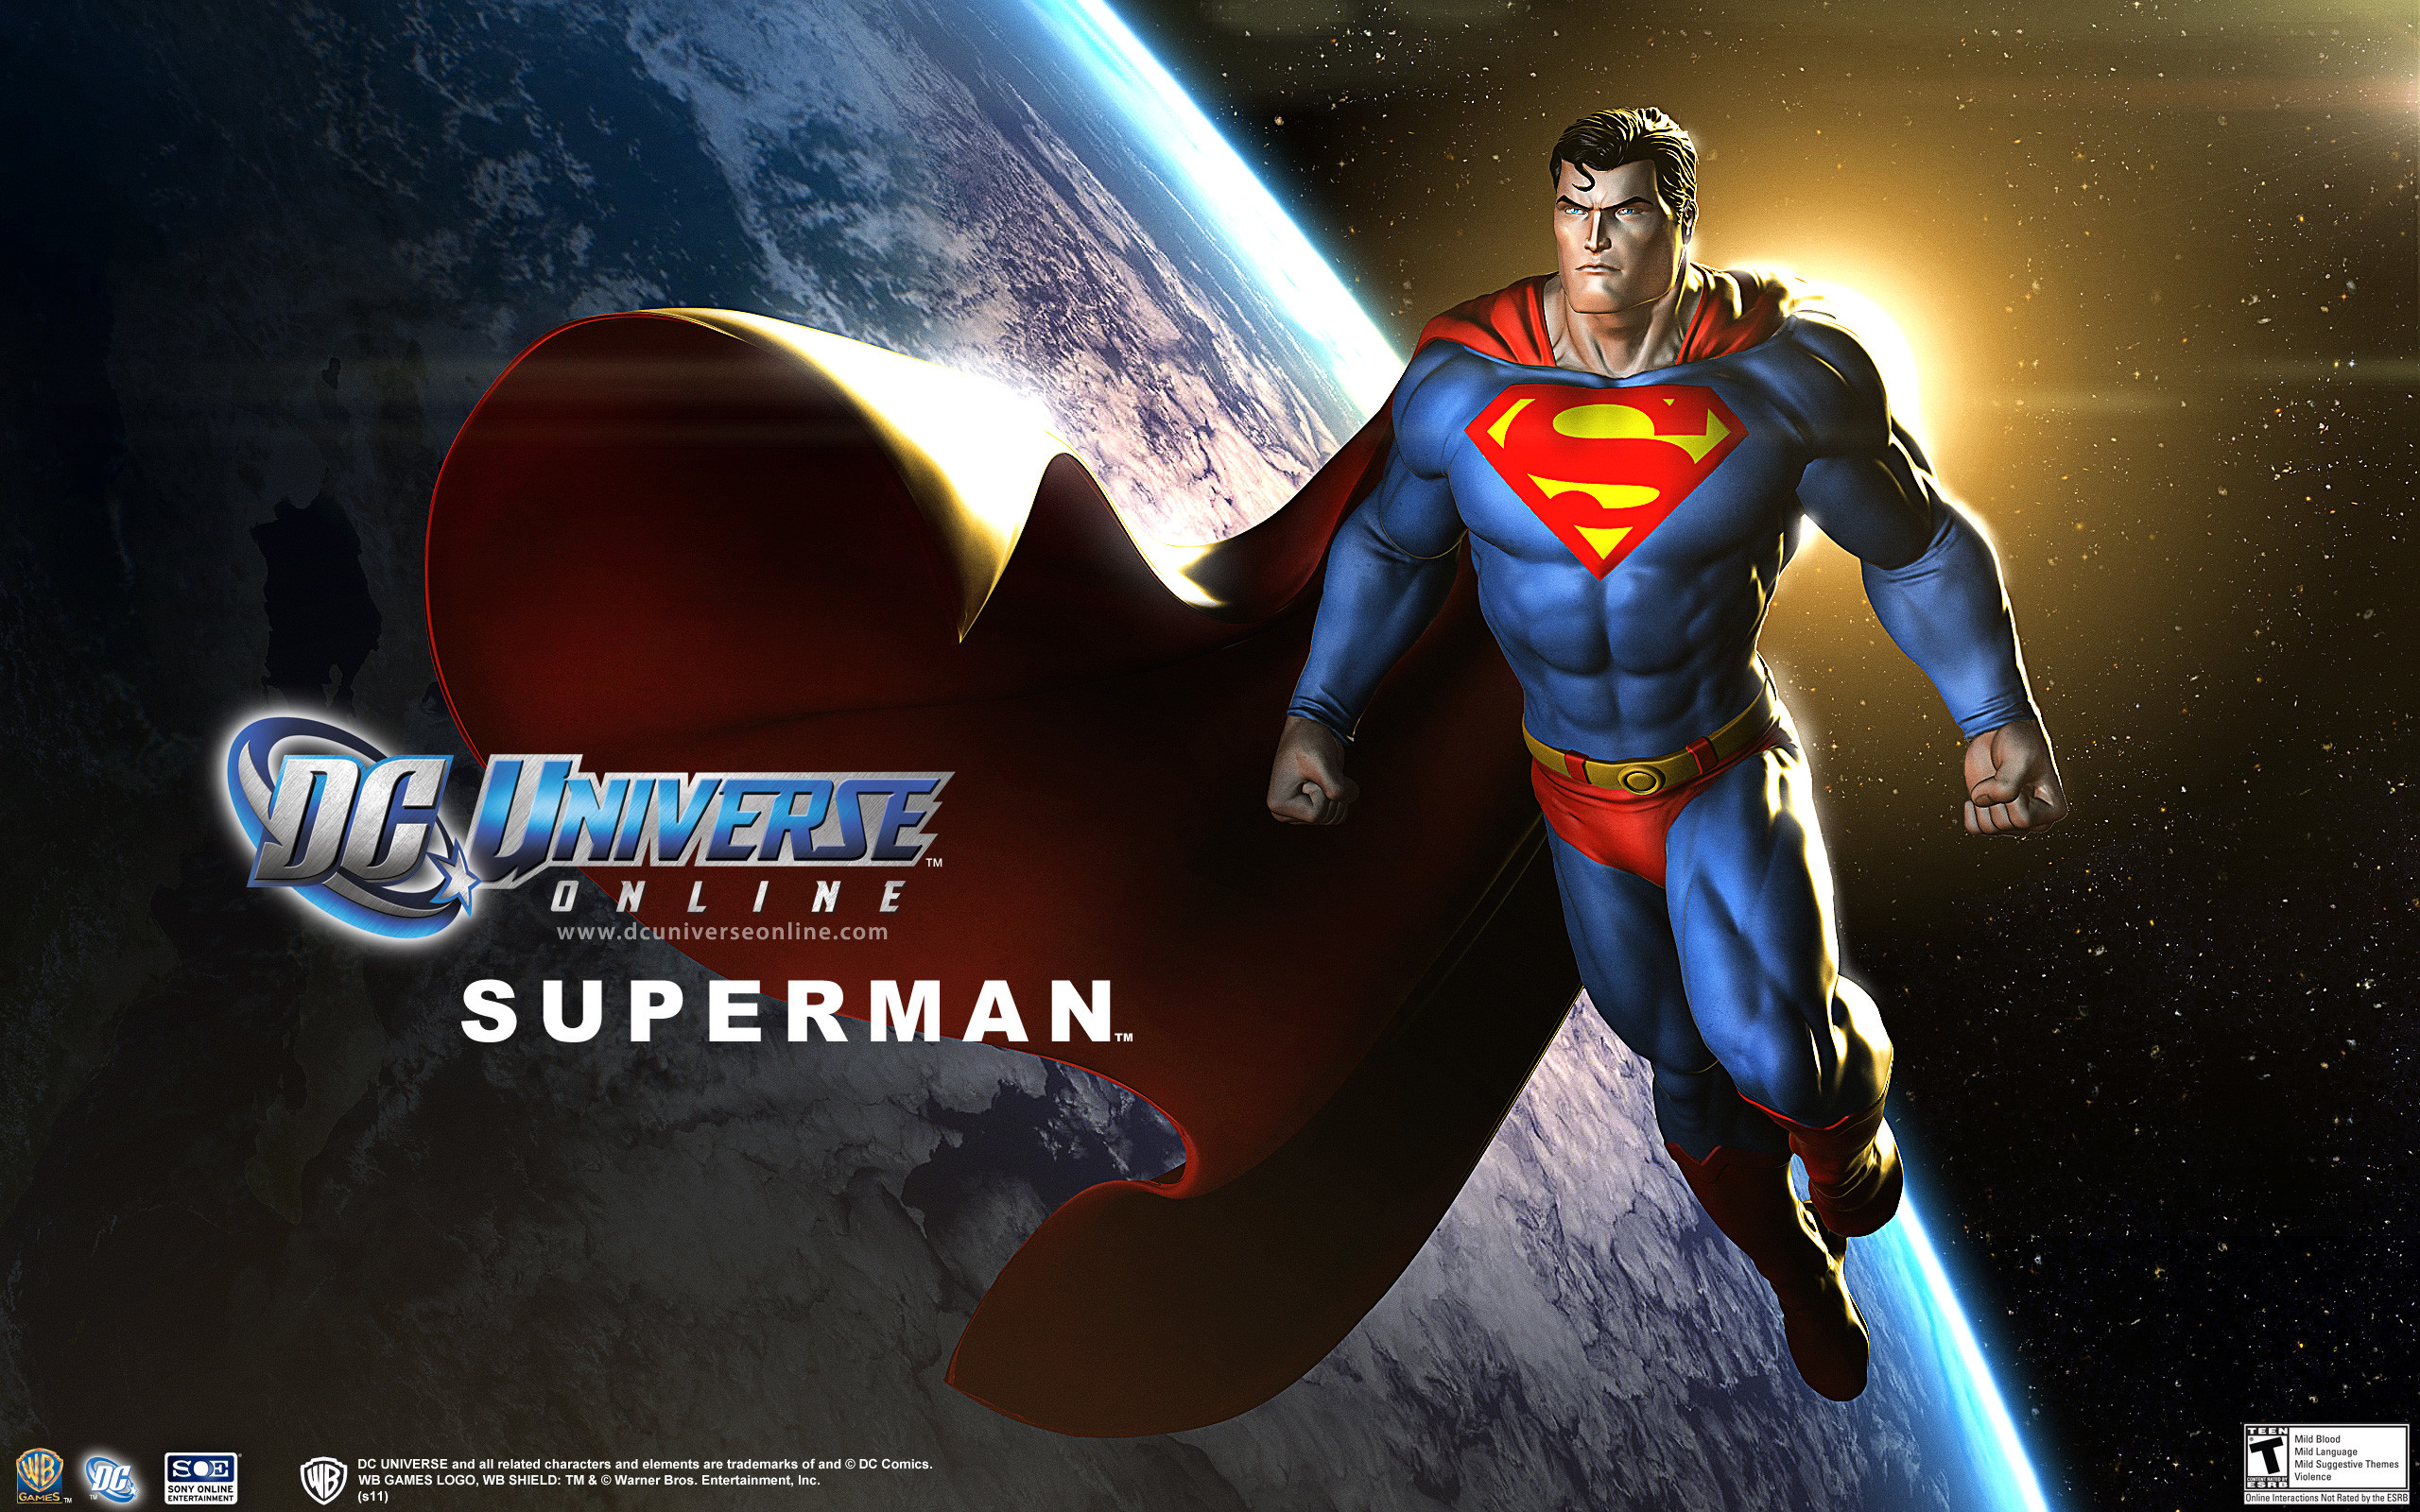 2560x1600 2560 x 1600 Â· 1621 kB Â· jpeg, DC Universe Online Superman. Marvel Incredible